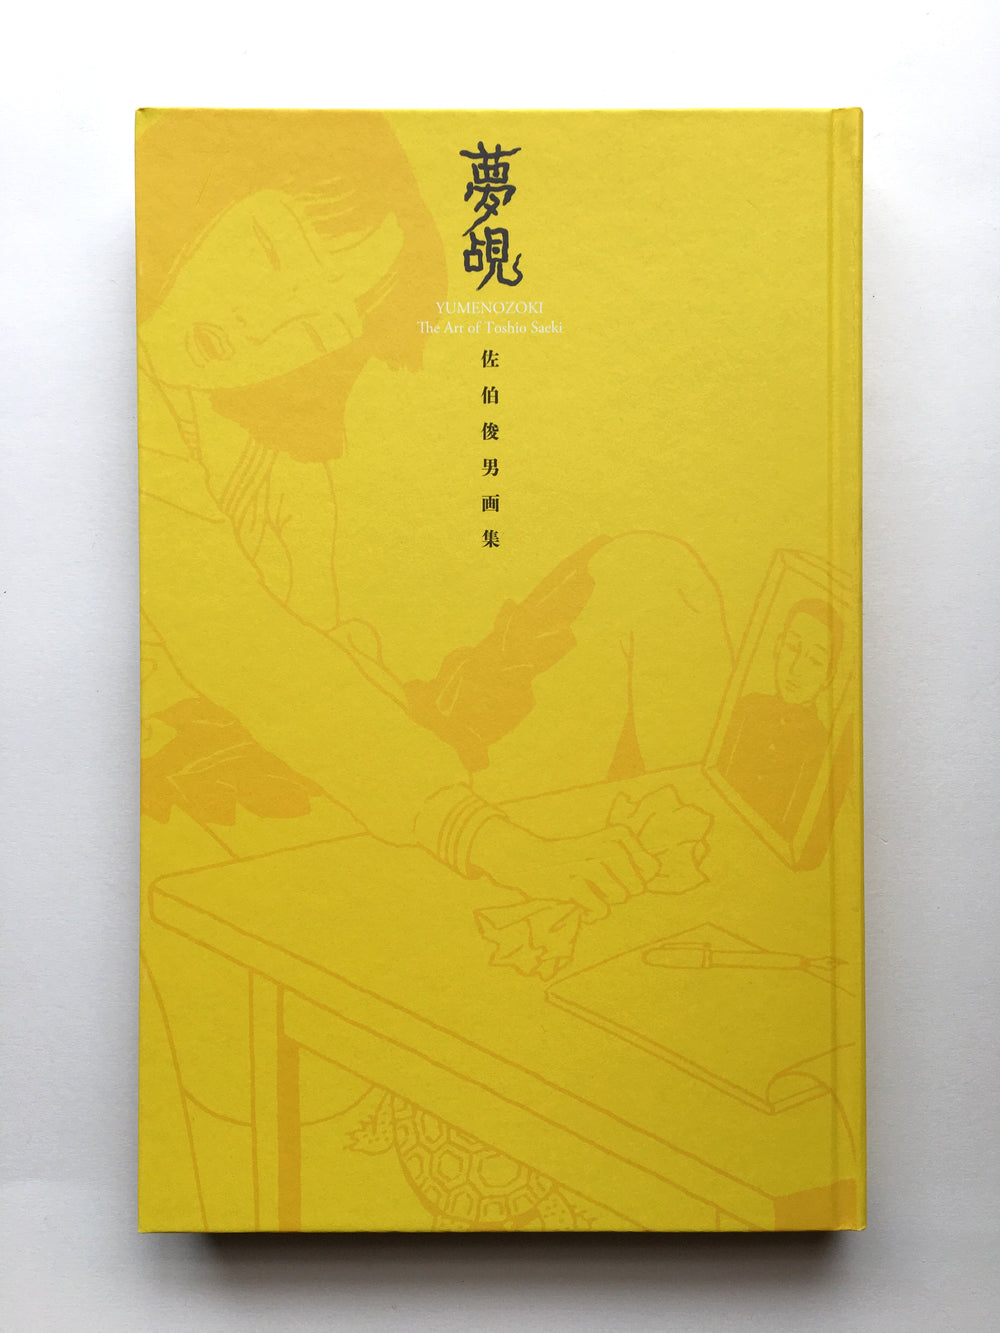 YUMENOZOKI The Art of Toshio Saeki (SIGNED!)